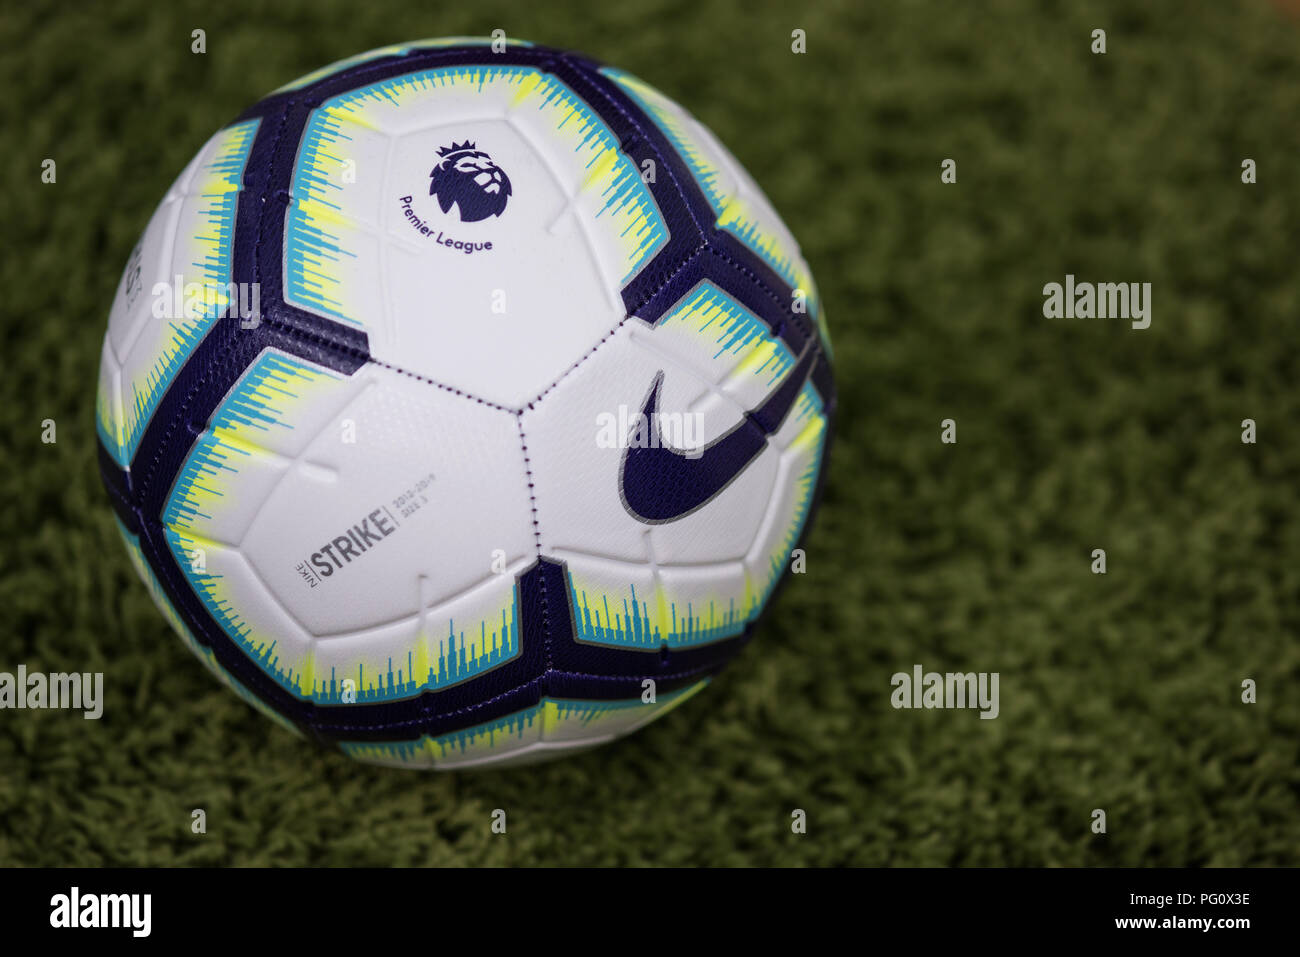 Rezumar Respectivamente Picasso Nike Merlin ball for 2018/19 Premier League season Stock Photo - Alamy